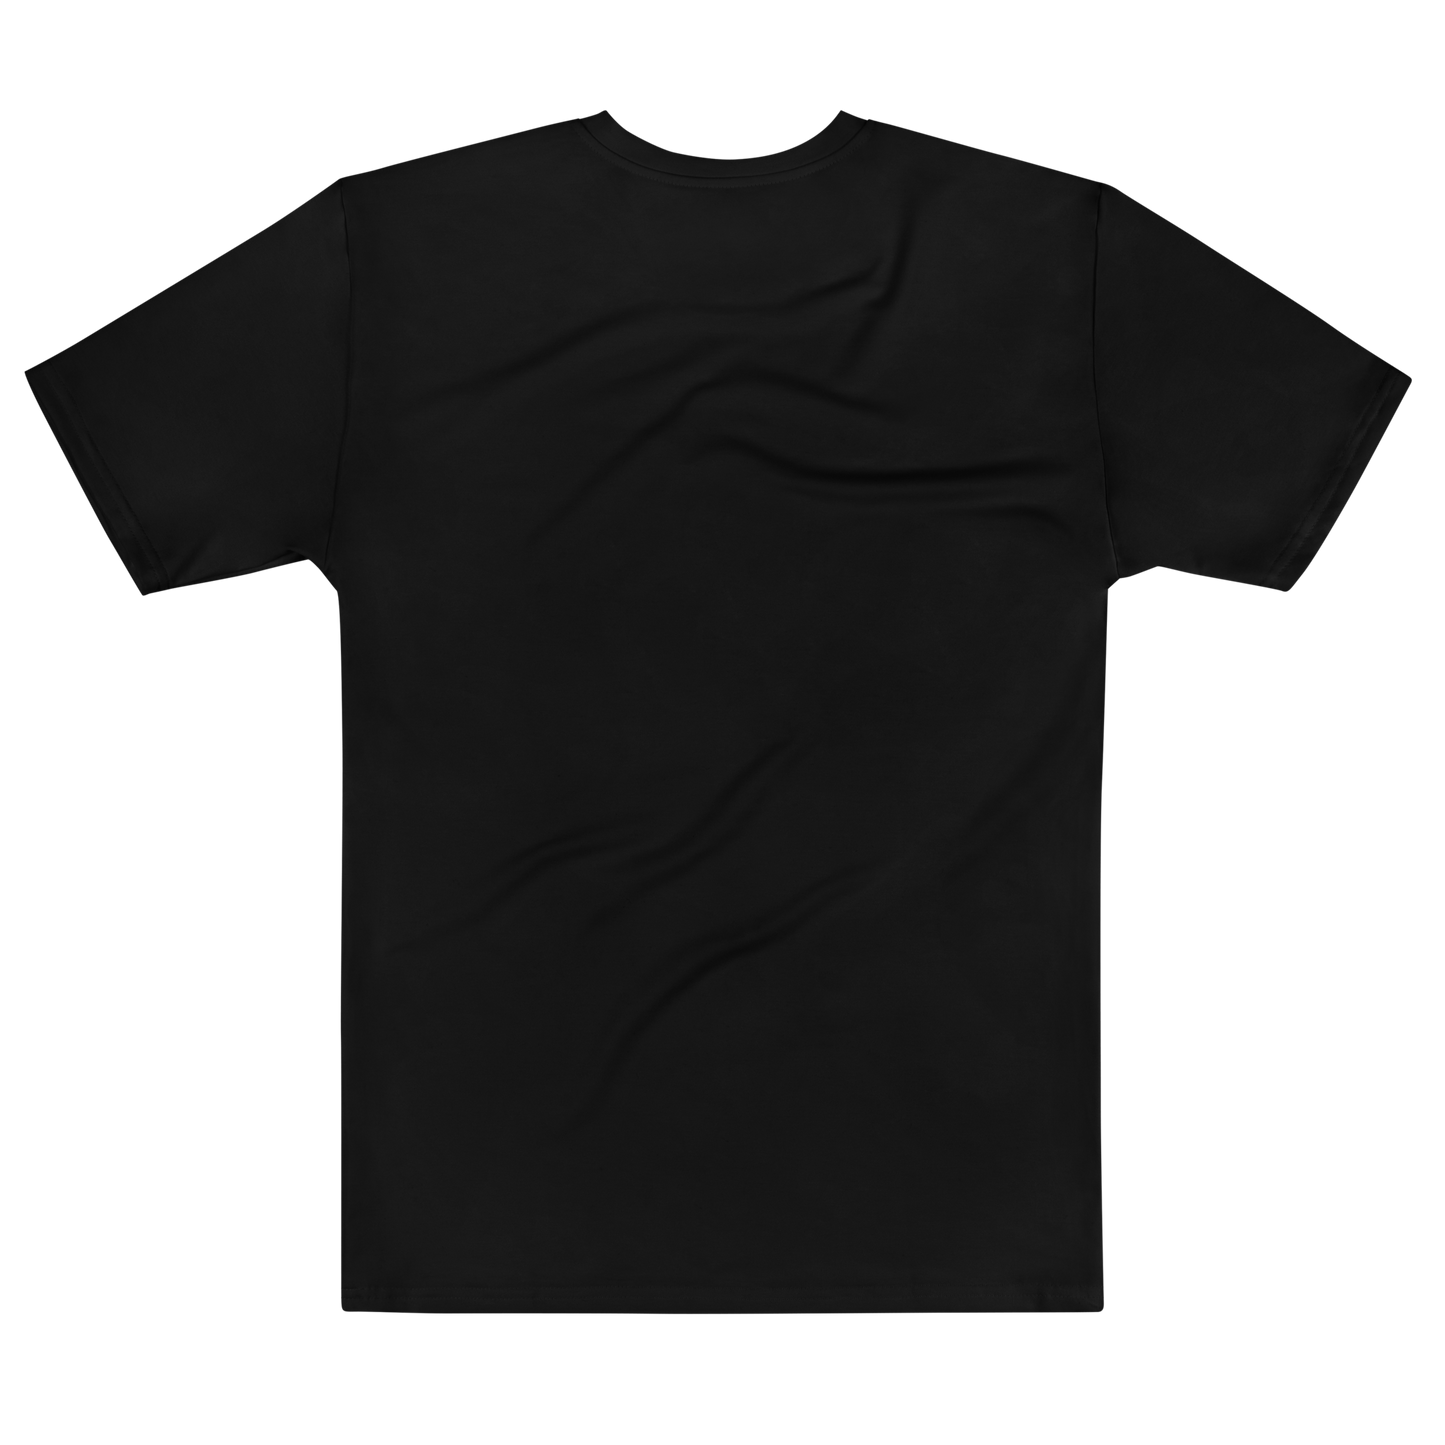 Abysium "Reaper" - Men's t-shirt